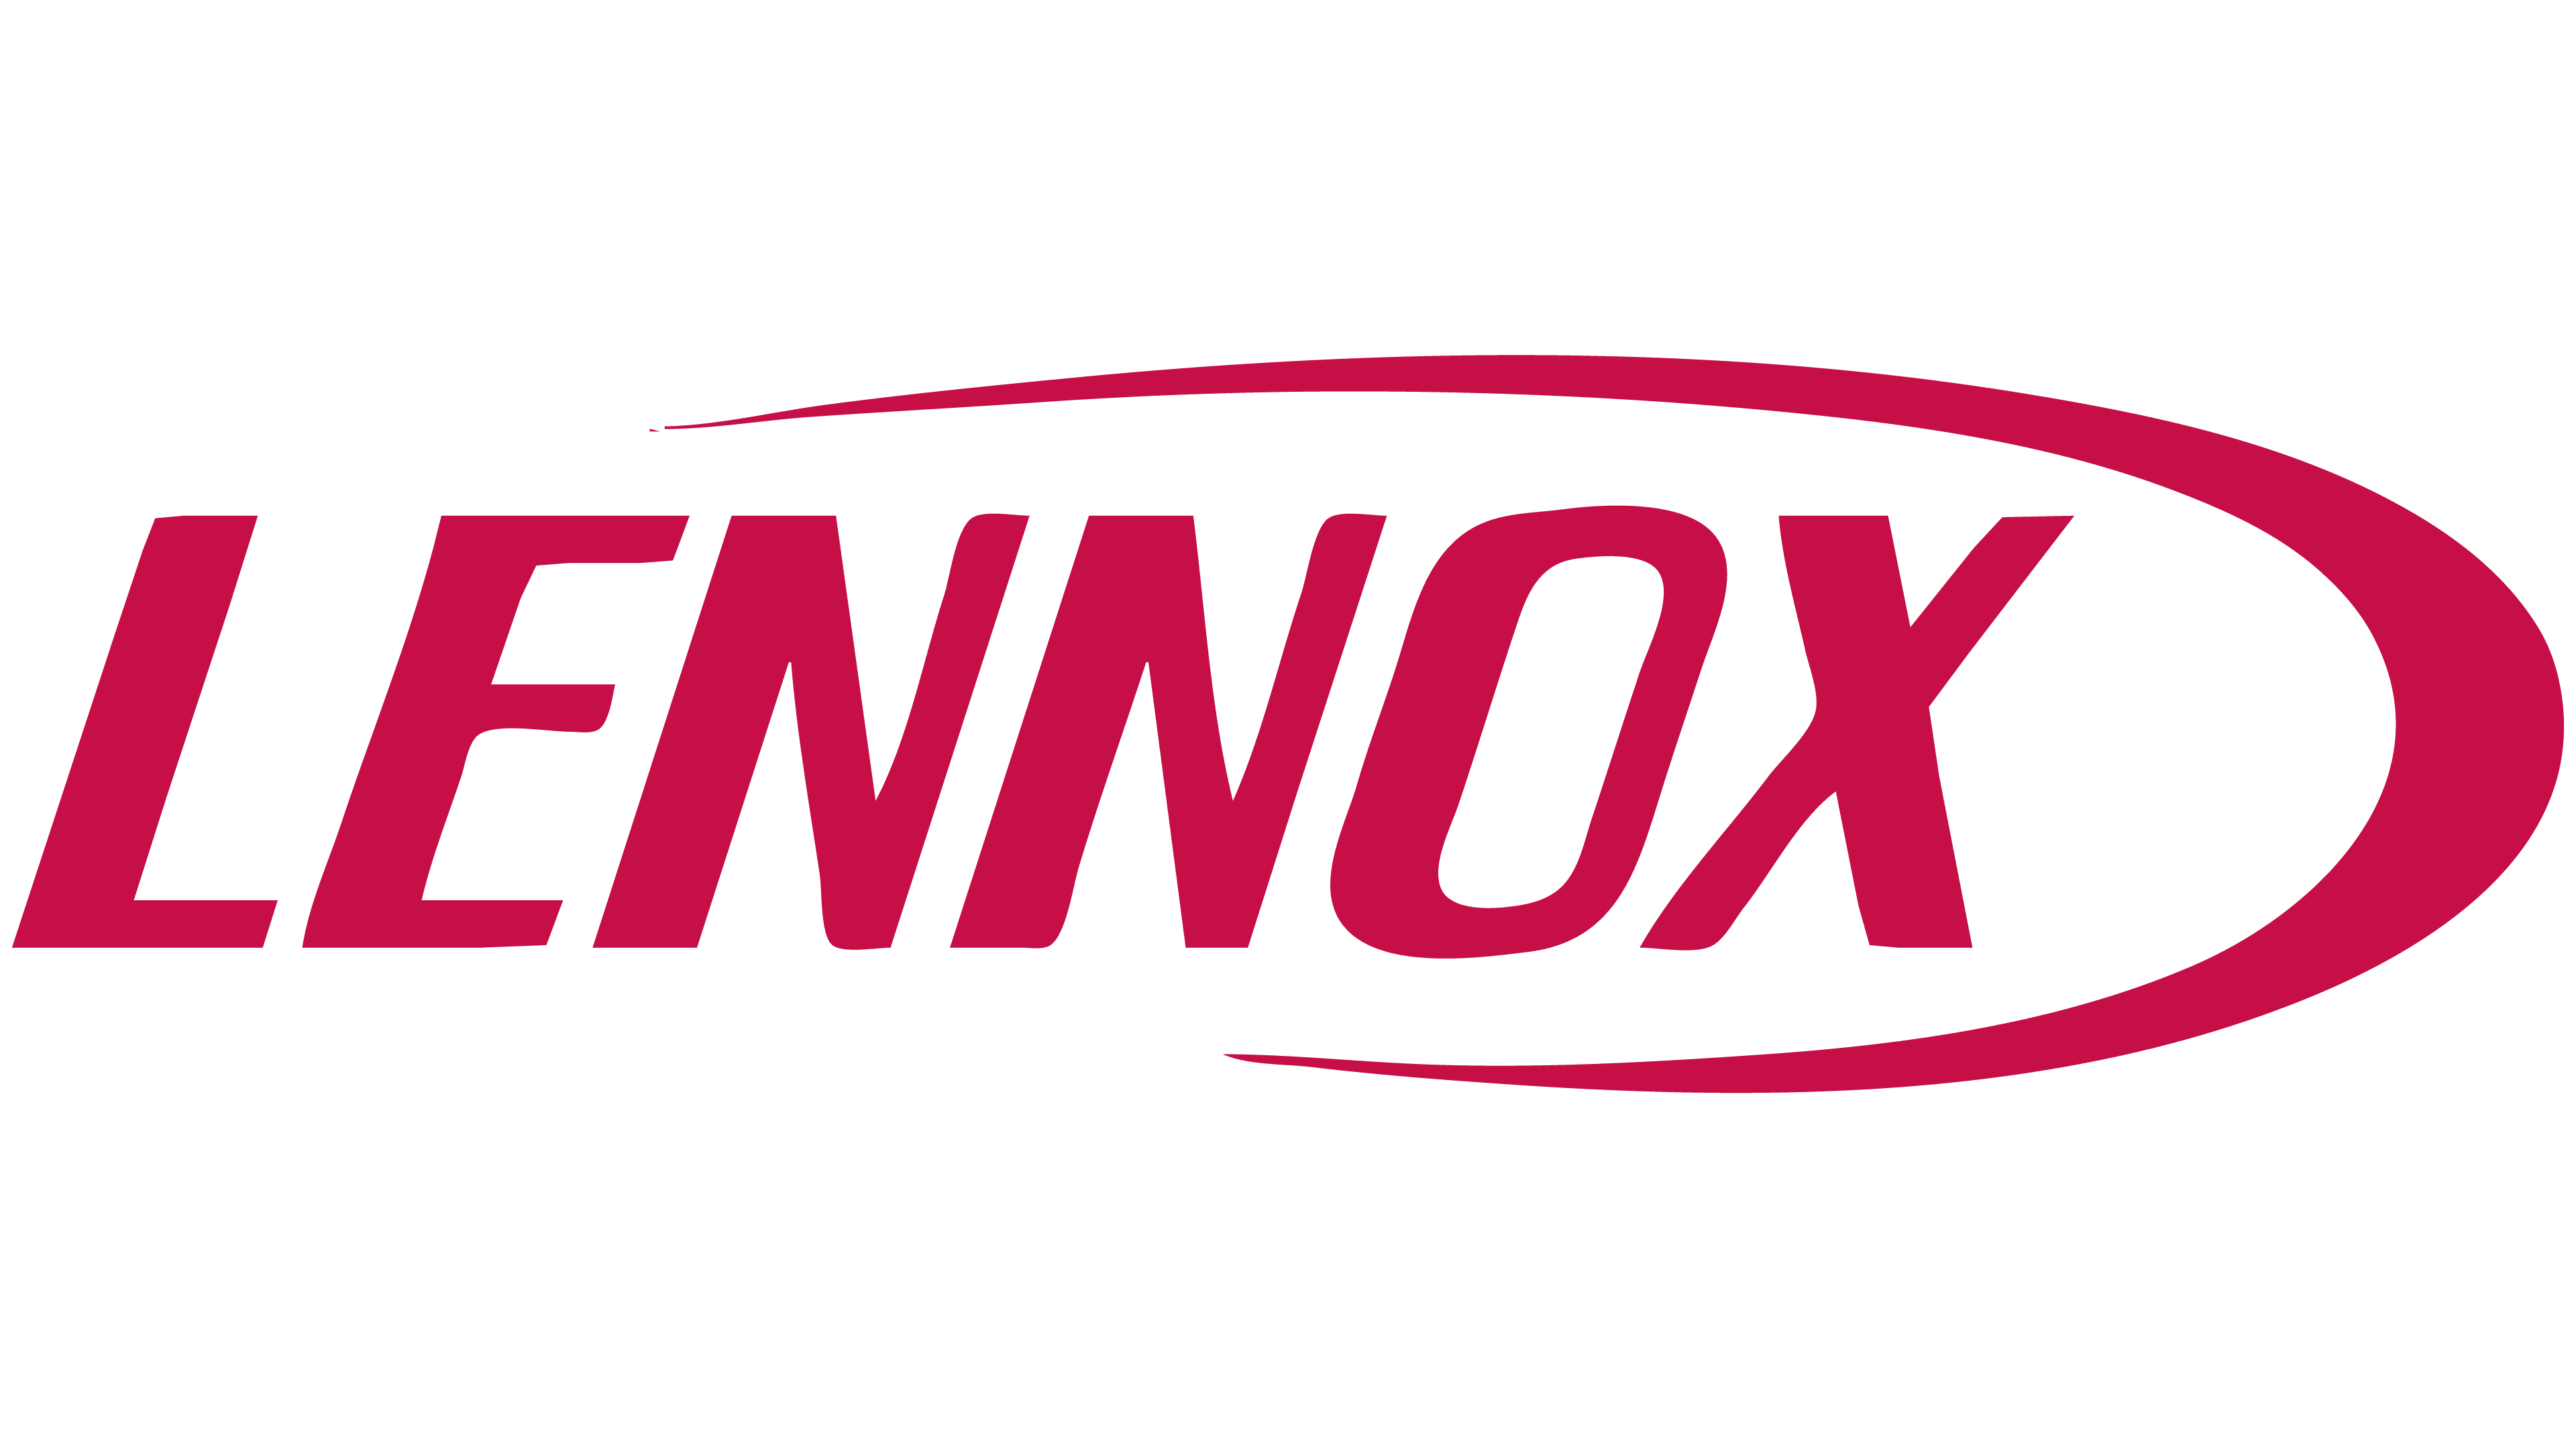 Lennox-logo